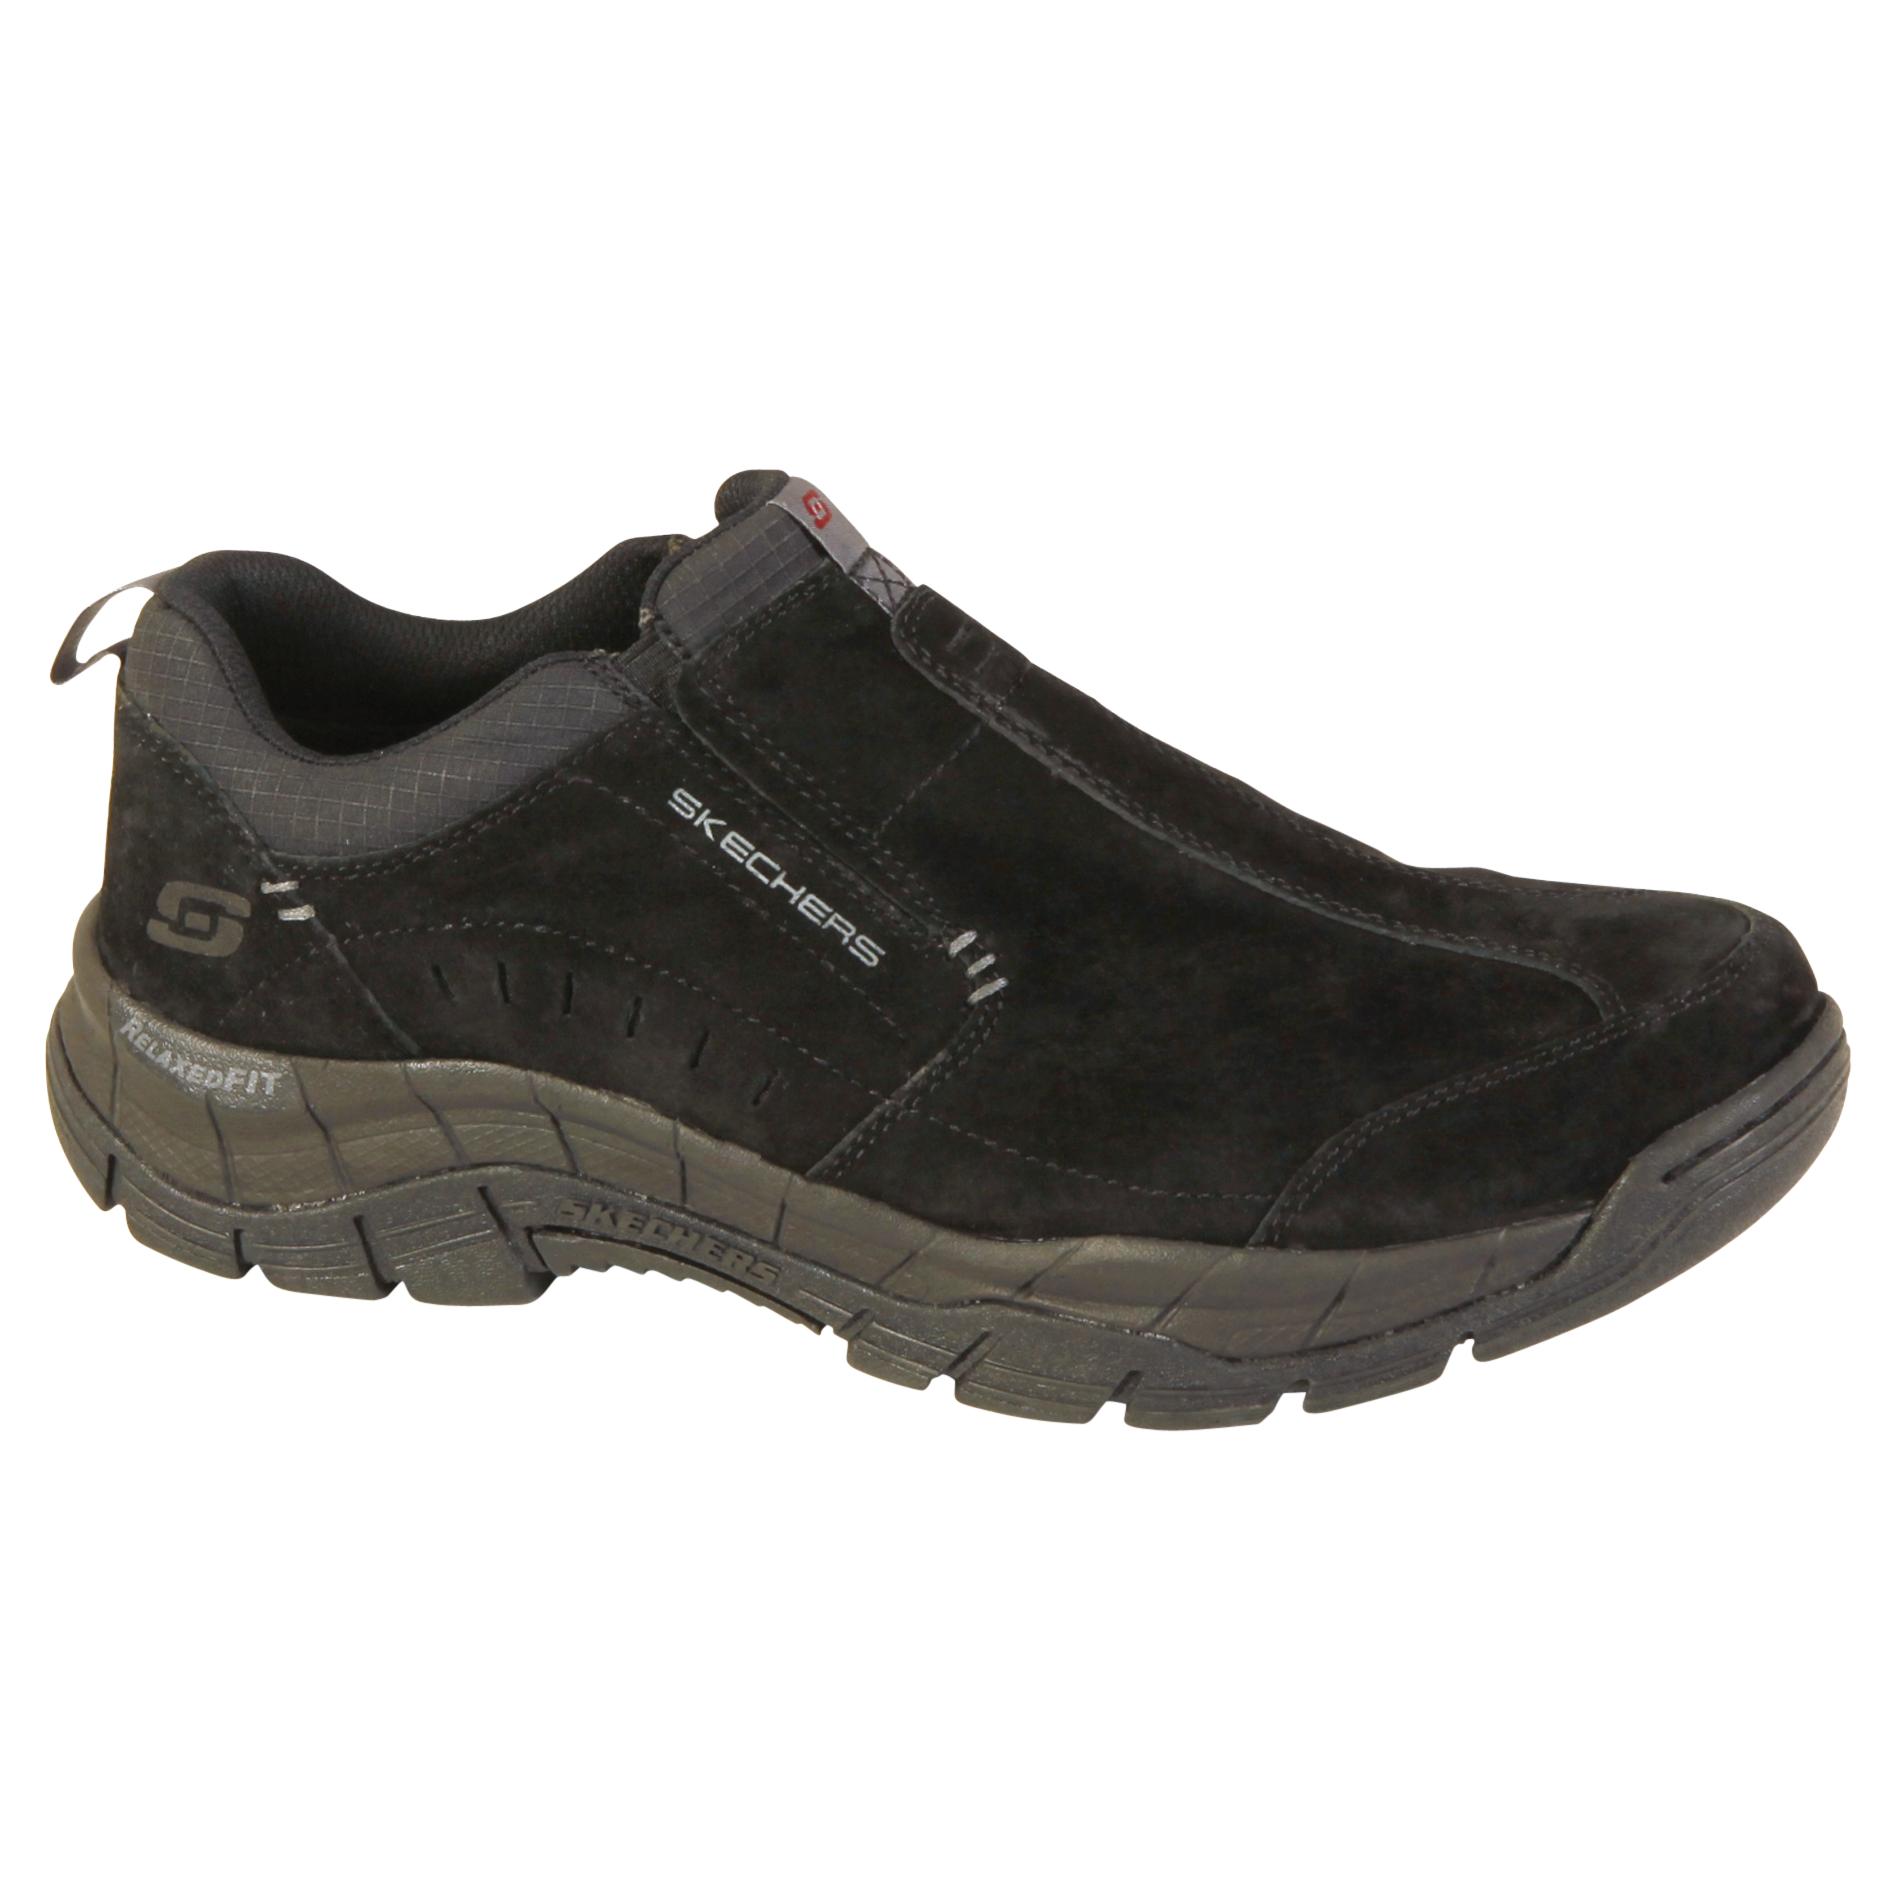 Skechers Men's Mountain Top Slip-on Casual Shoe- Black